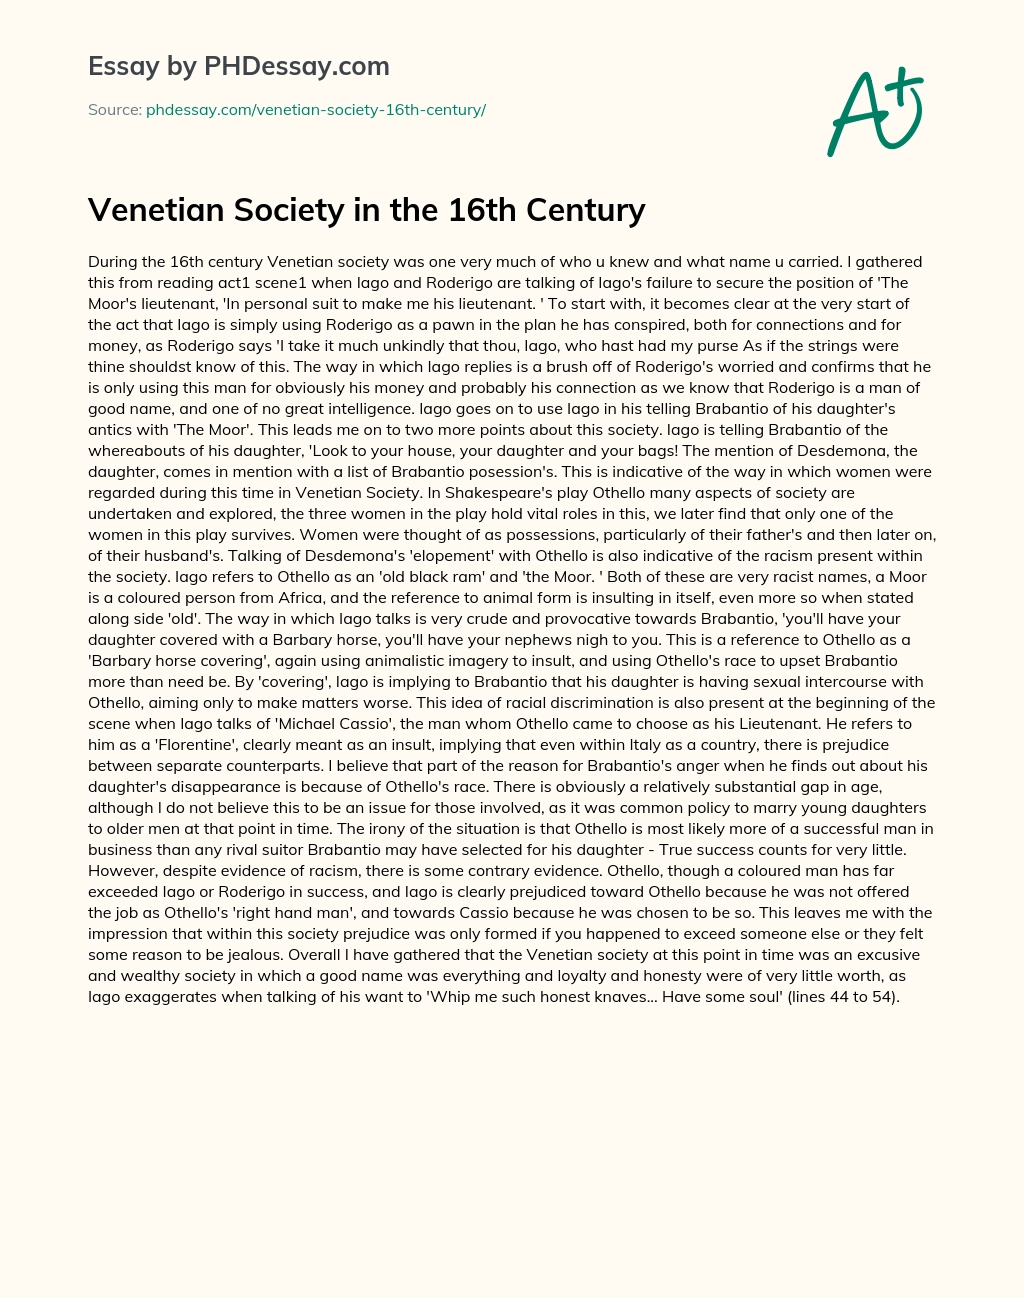 Venetian Society in the 16th Century essay